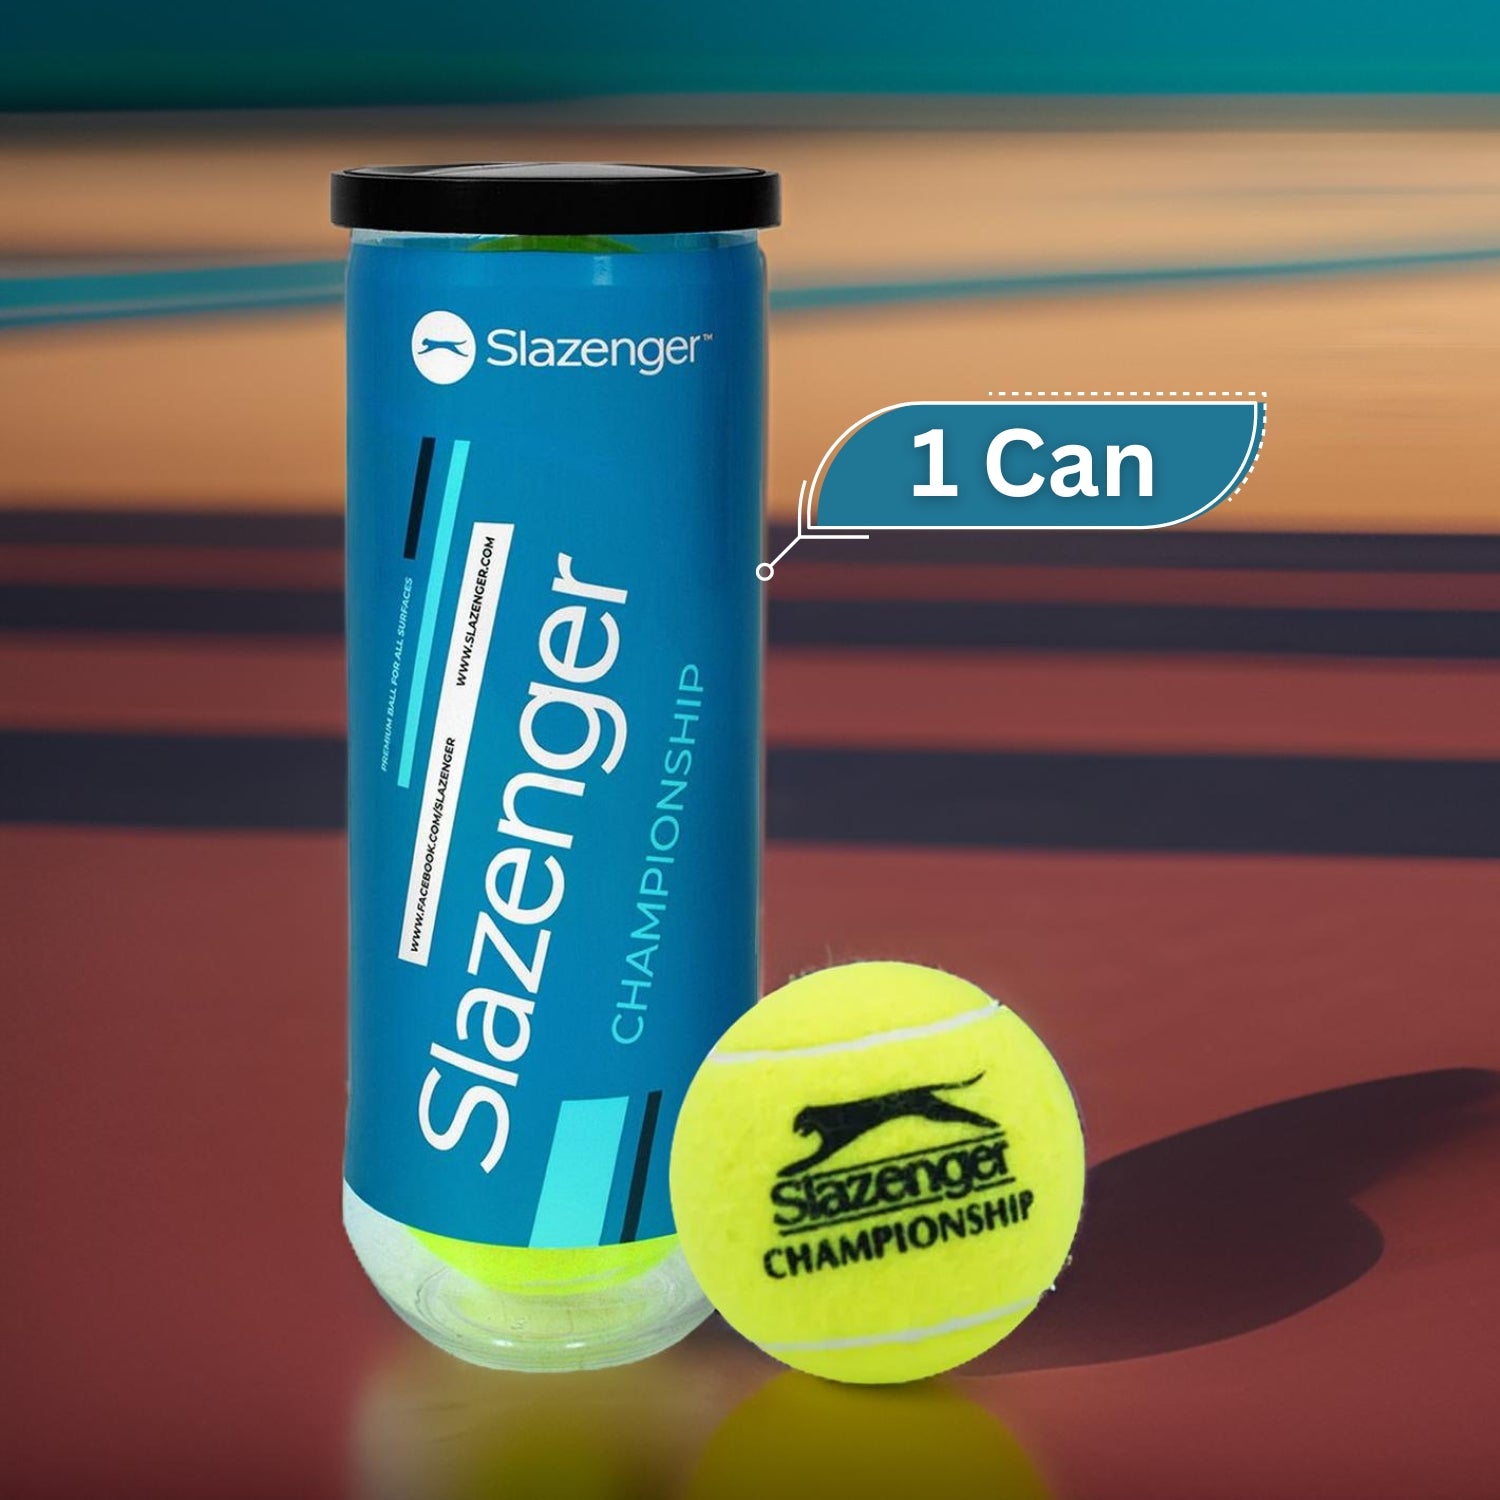 Slazenger Championship All Surface Tennis Balls Can (1 Can) - Best Price online Prokicksports.com